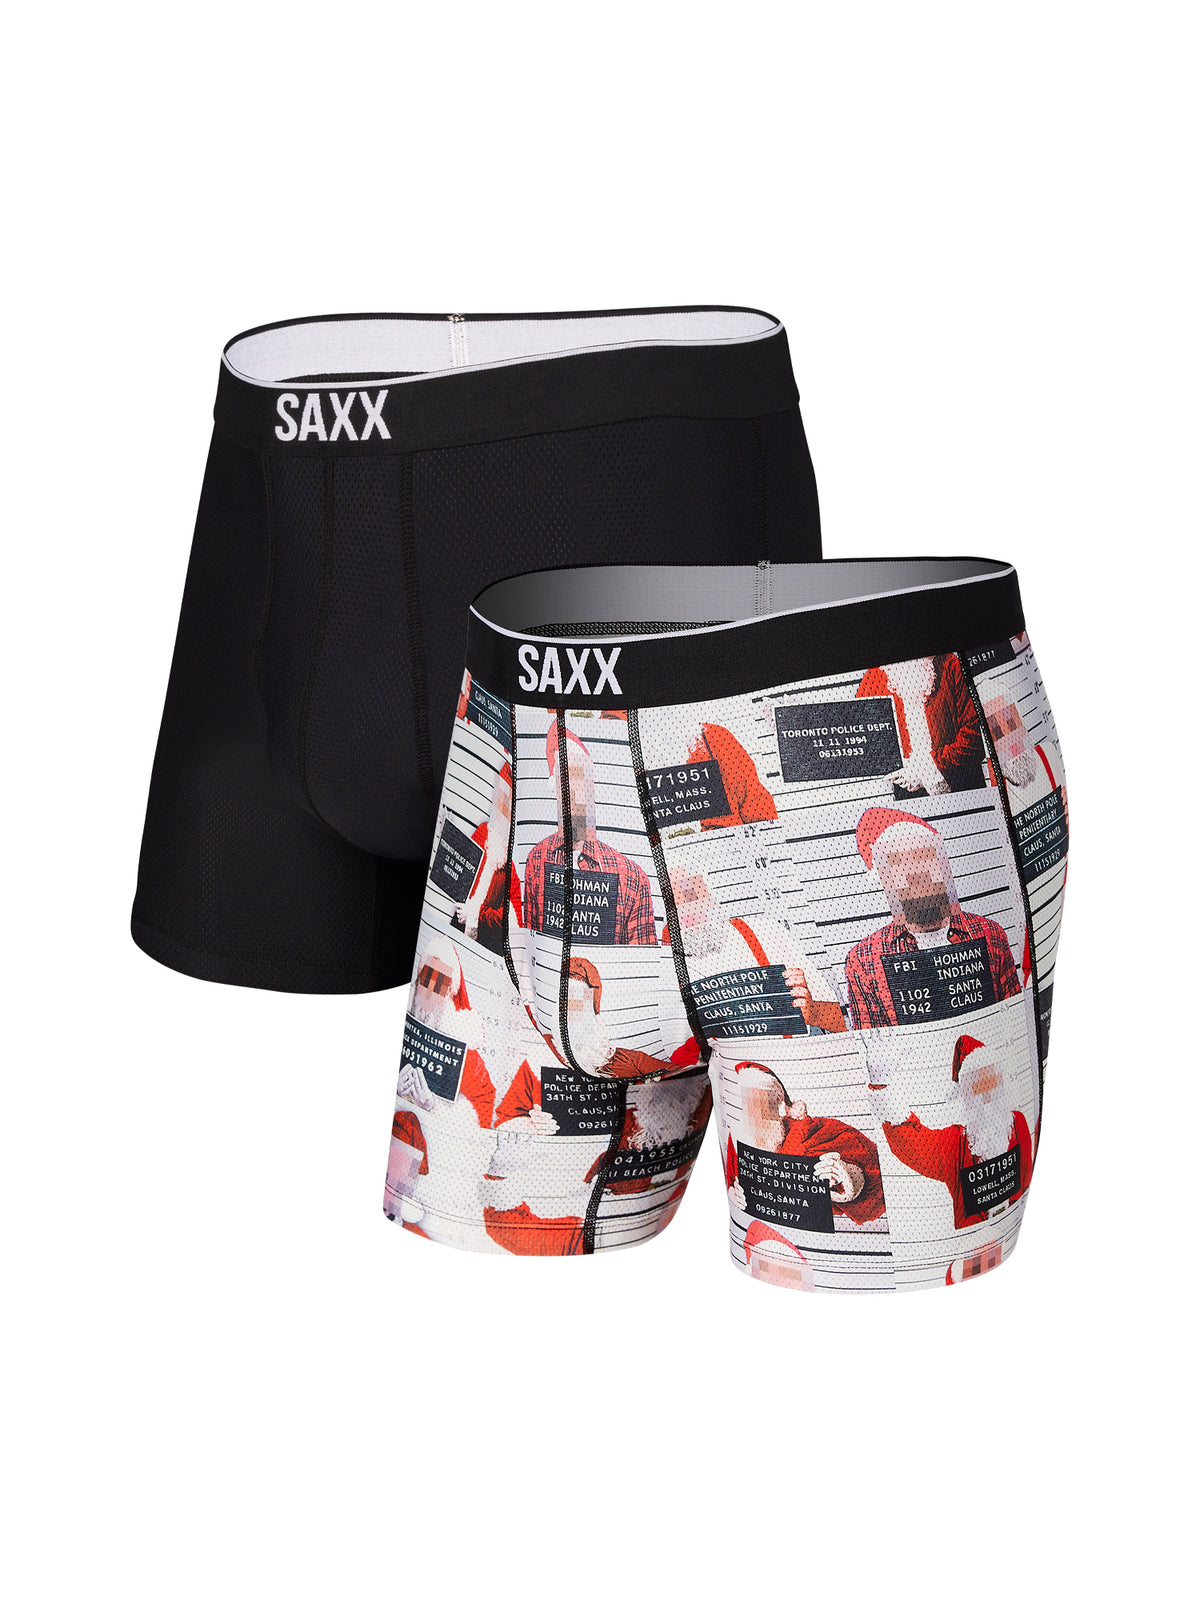 SAXX VOLT BOXER BRIEF 2 PACK - BAD SANTA - CLEARANCE